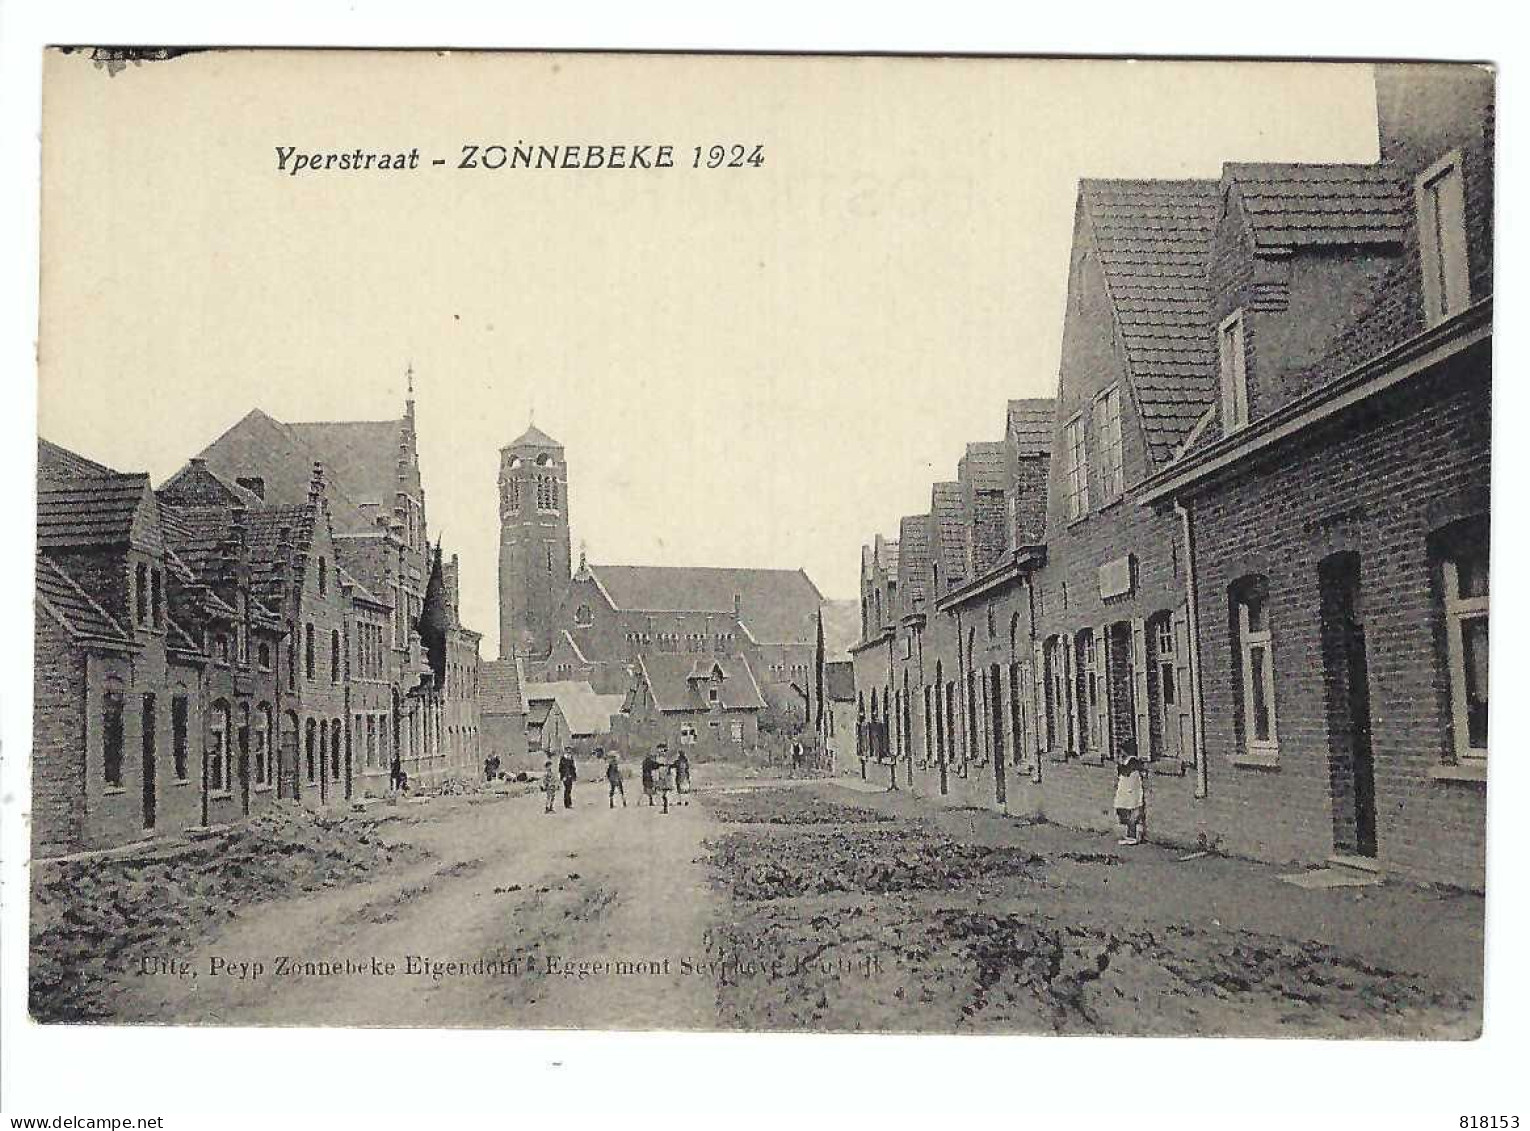 ZONNEBEKE 1924  -  Yperstraat  Uitg Peyp Zonnebeke Eigendom - Eggermont Seynaeve - Kortrijk - Zonnebeke